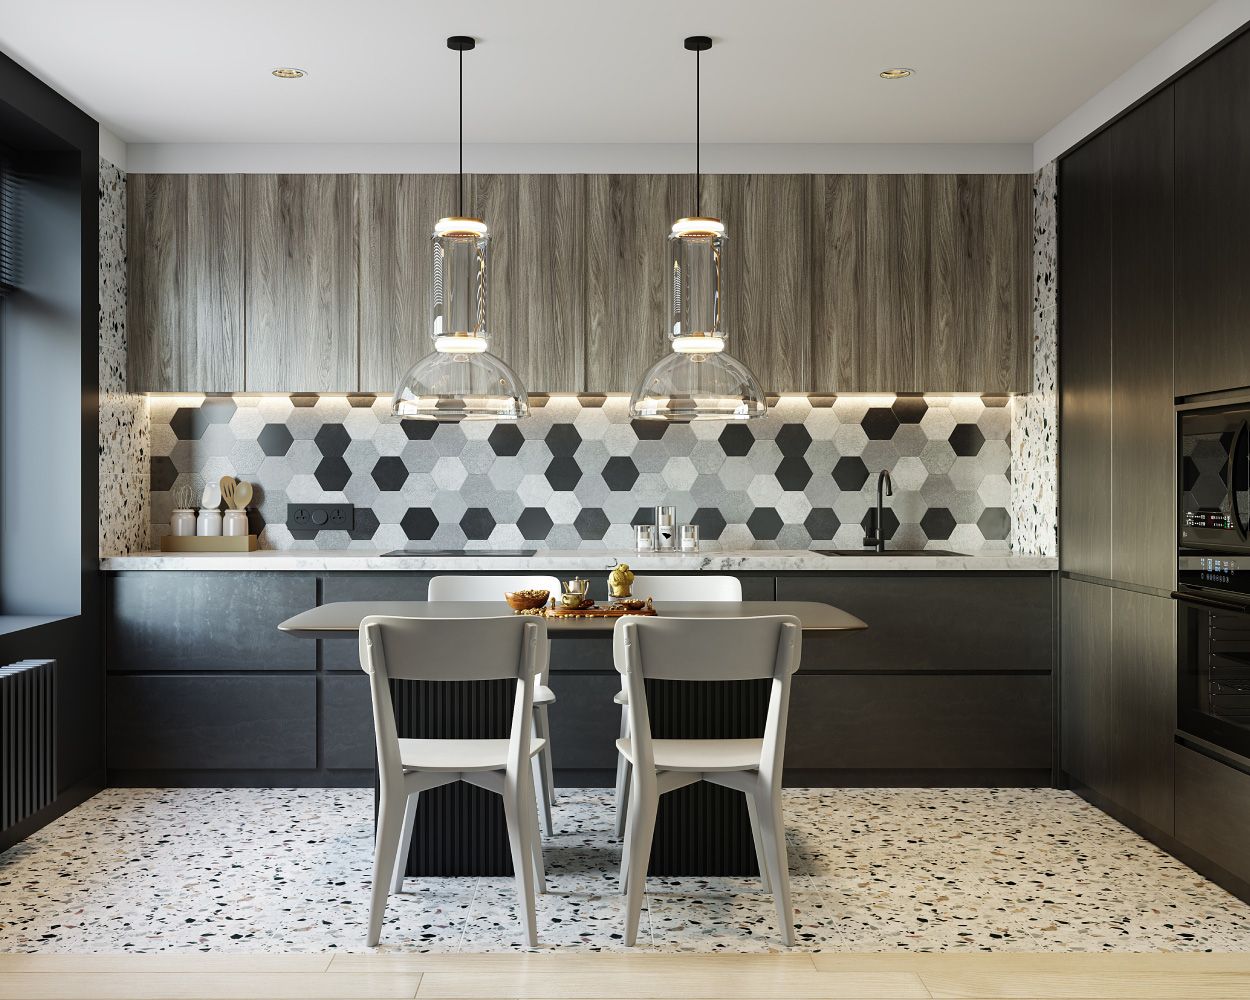 Modern Wood And Black Open Kitchen Design With Tri-Toned Hexagonal Kitchen Backsplash